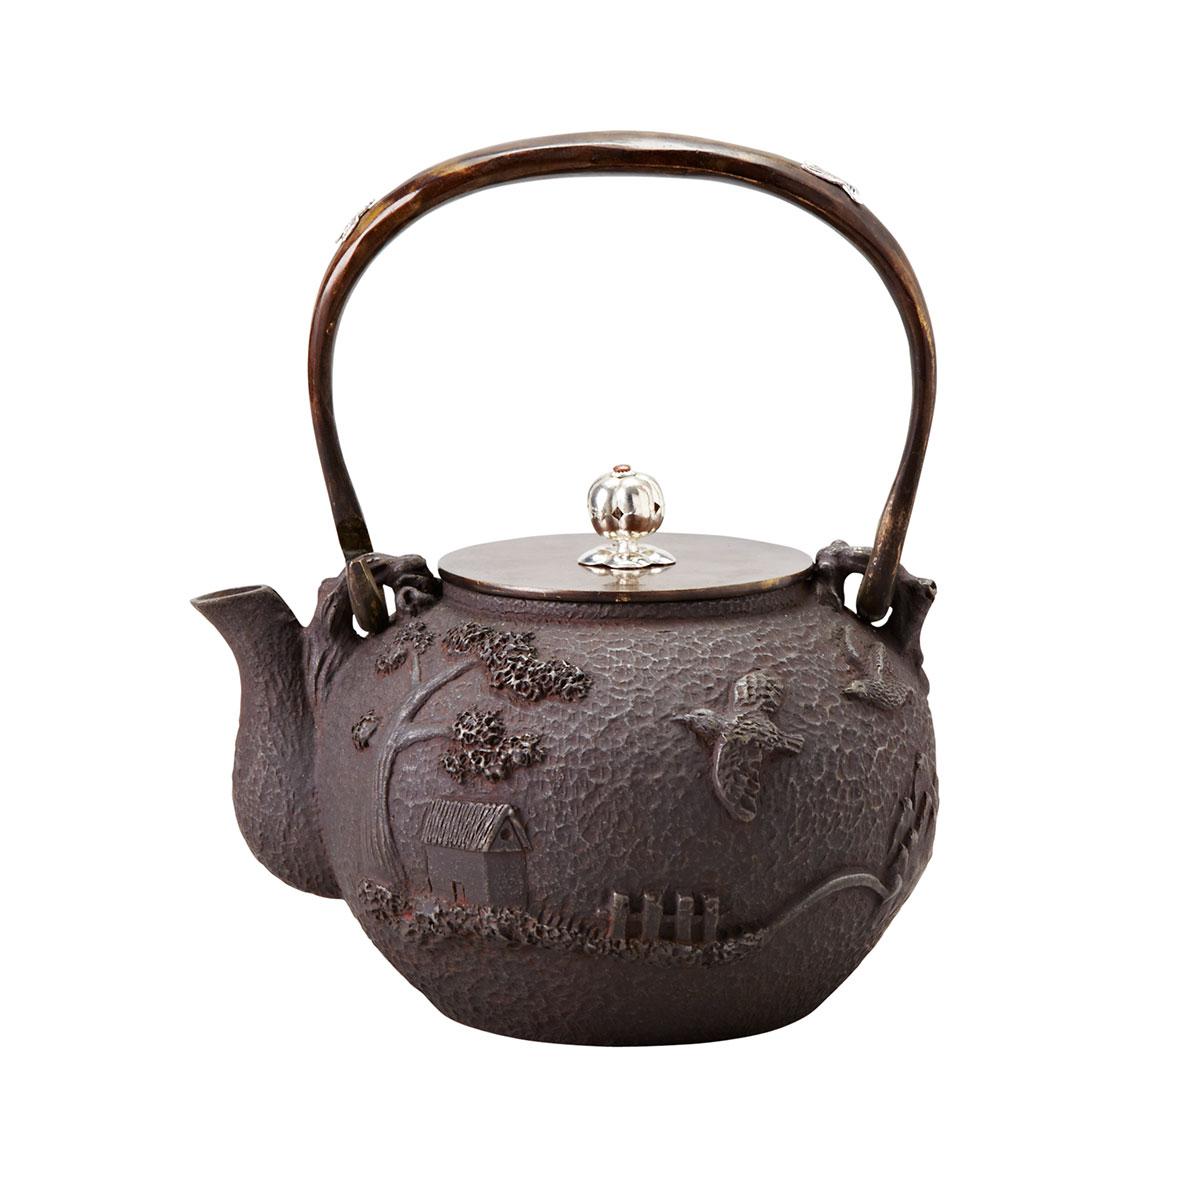 Iron and Mixed-Metal Teapot, Tetsubin, Meiji Period, Late 19th Century